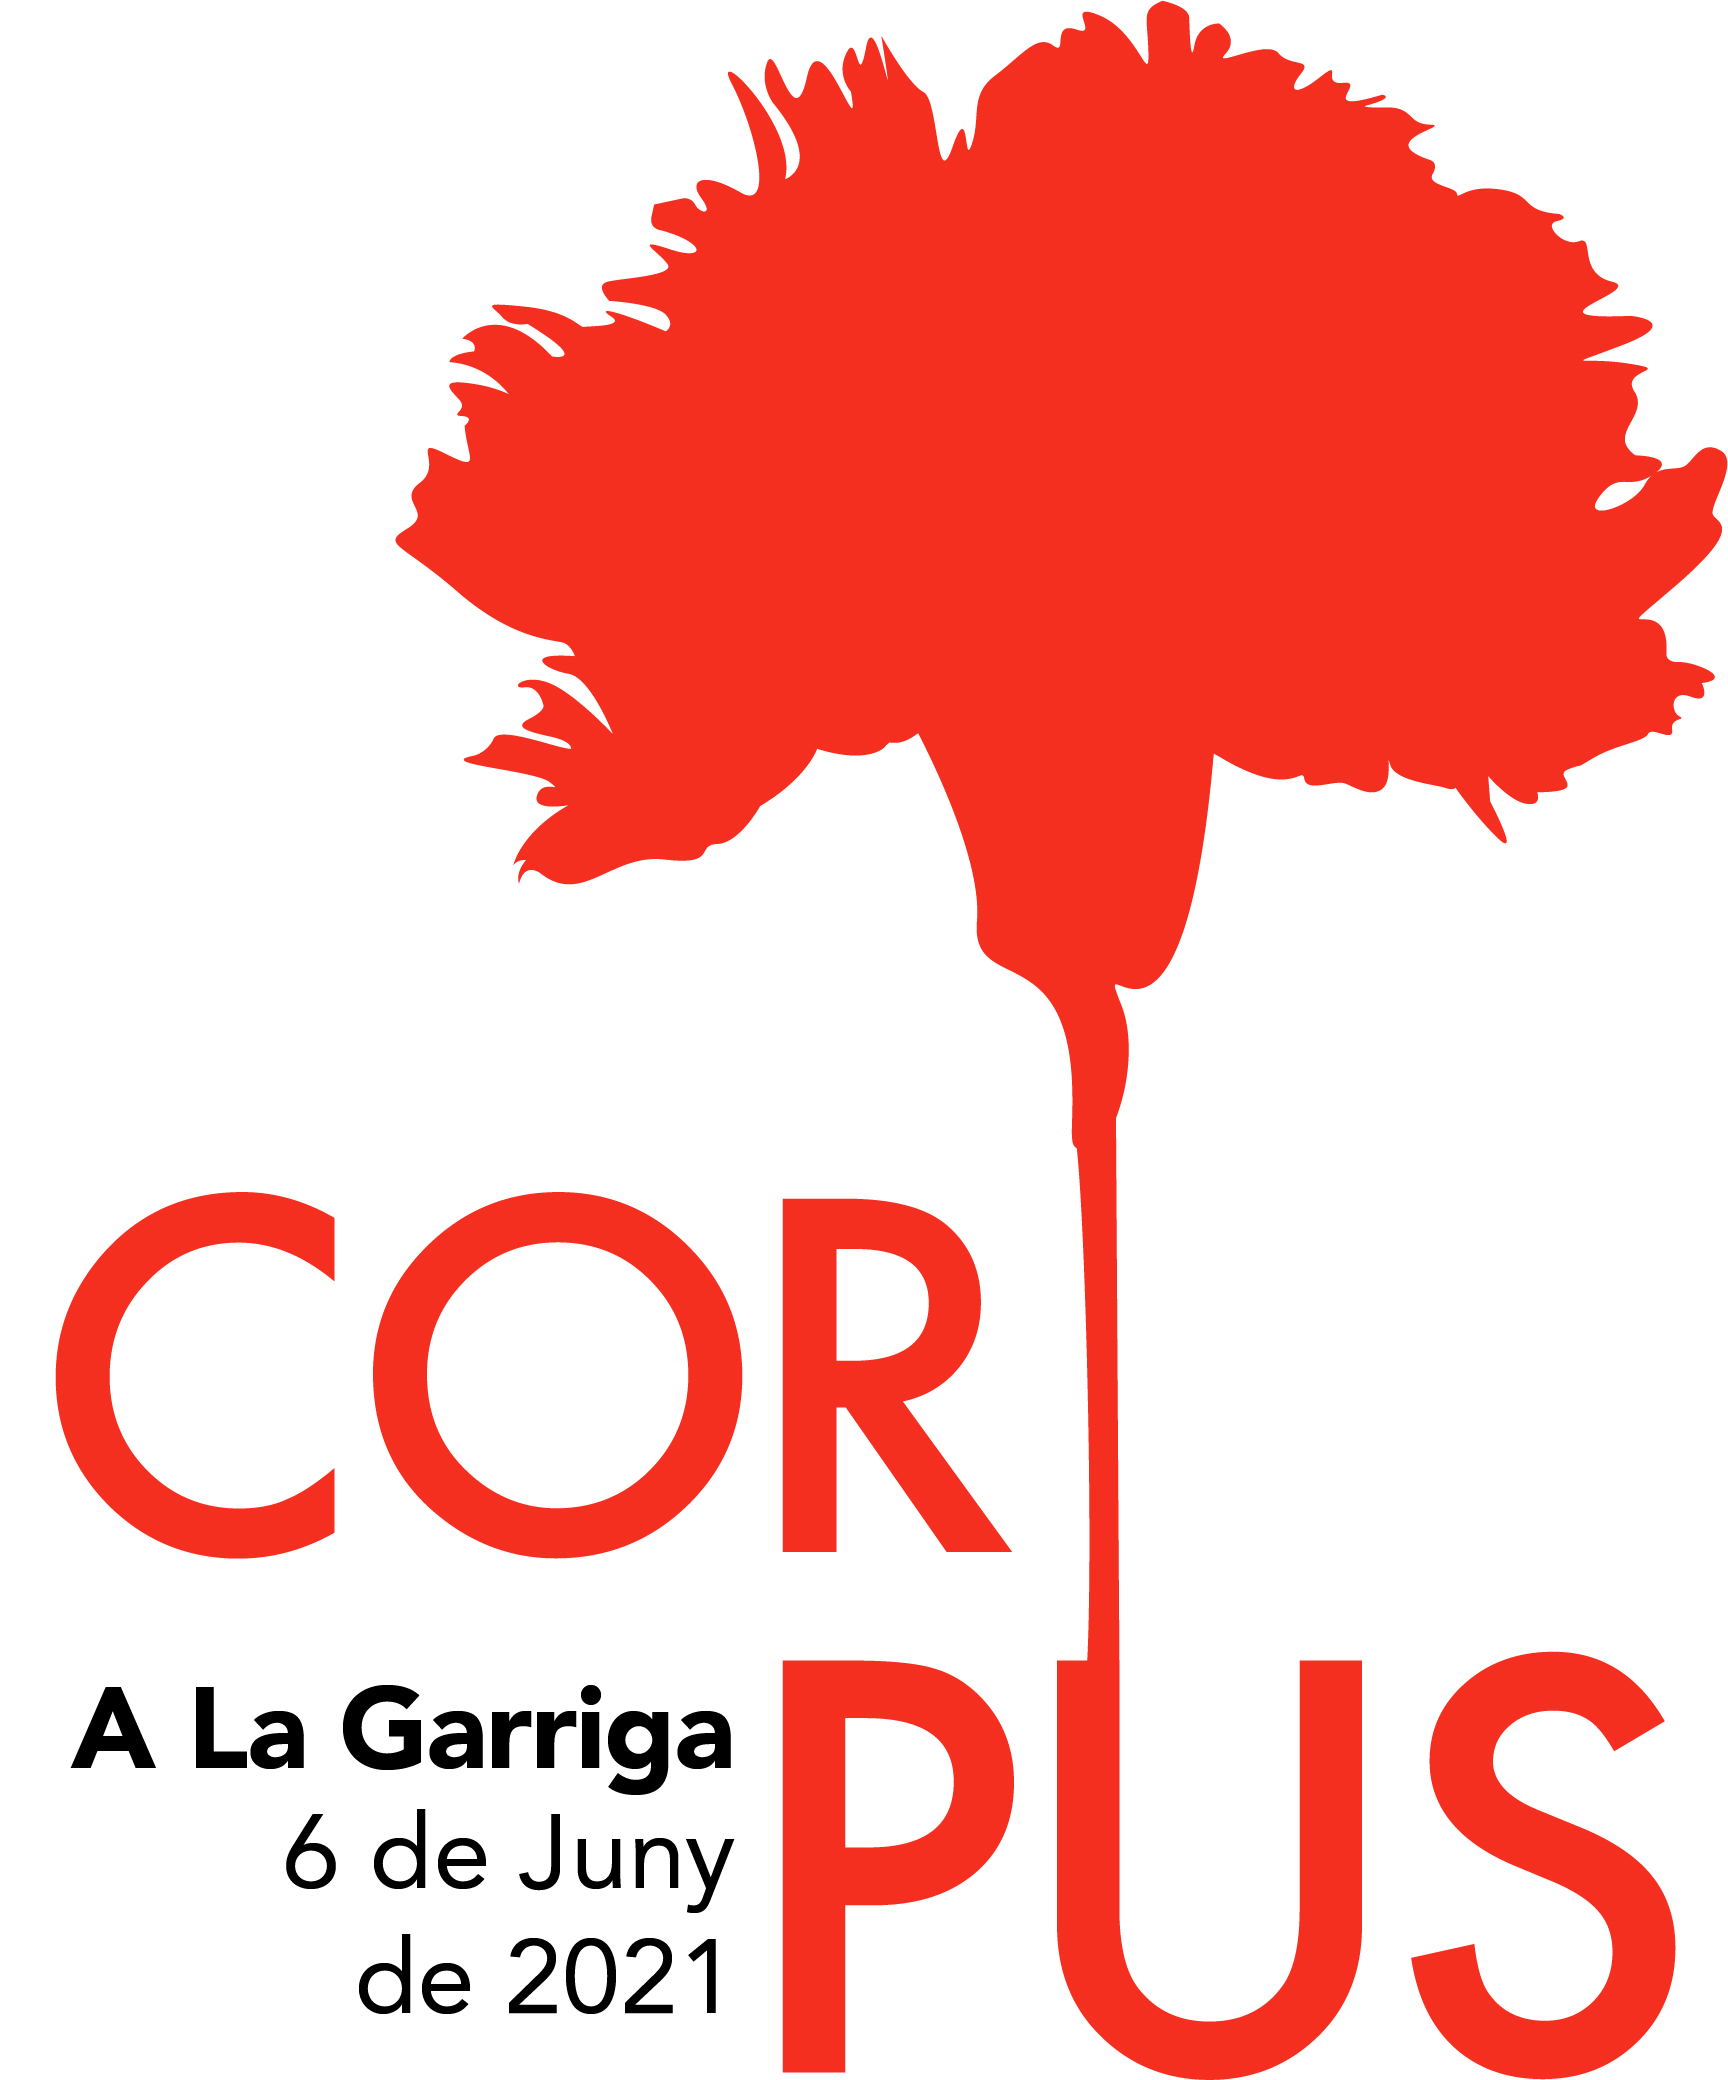 La Garriga pepara la seva celebració del Corpus